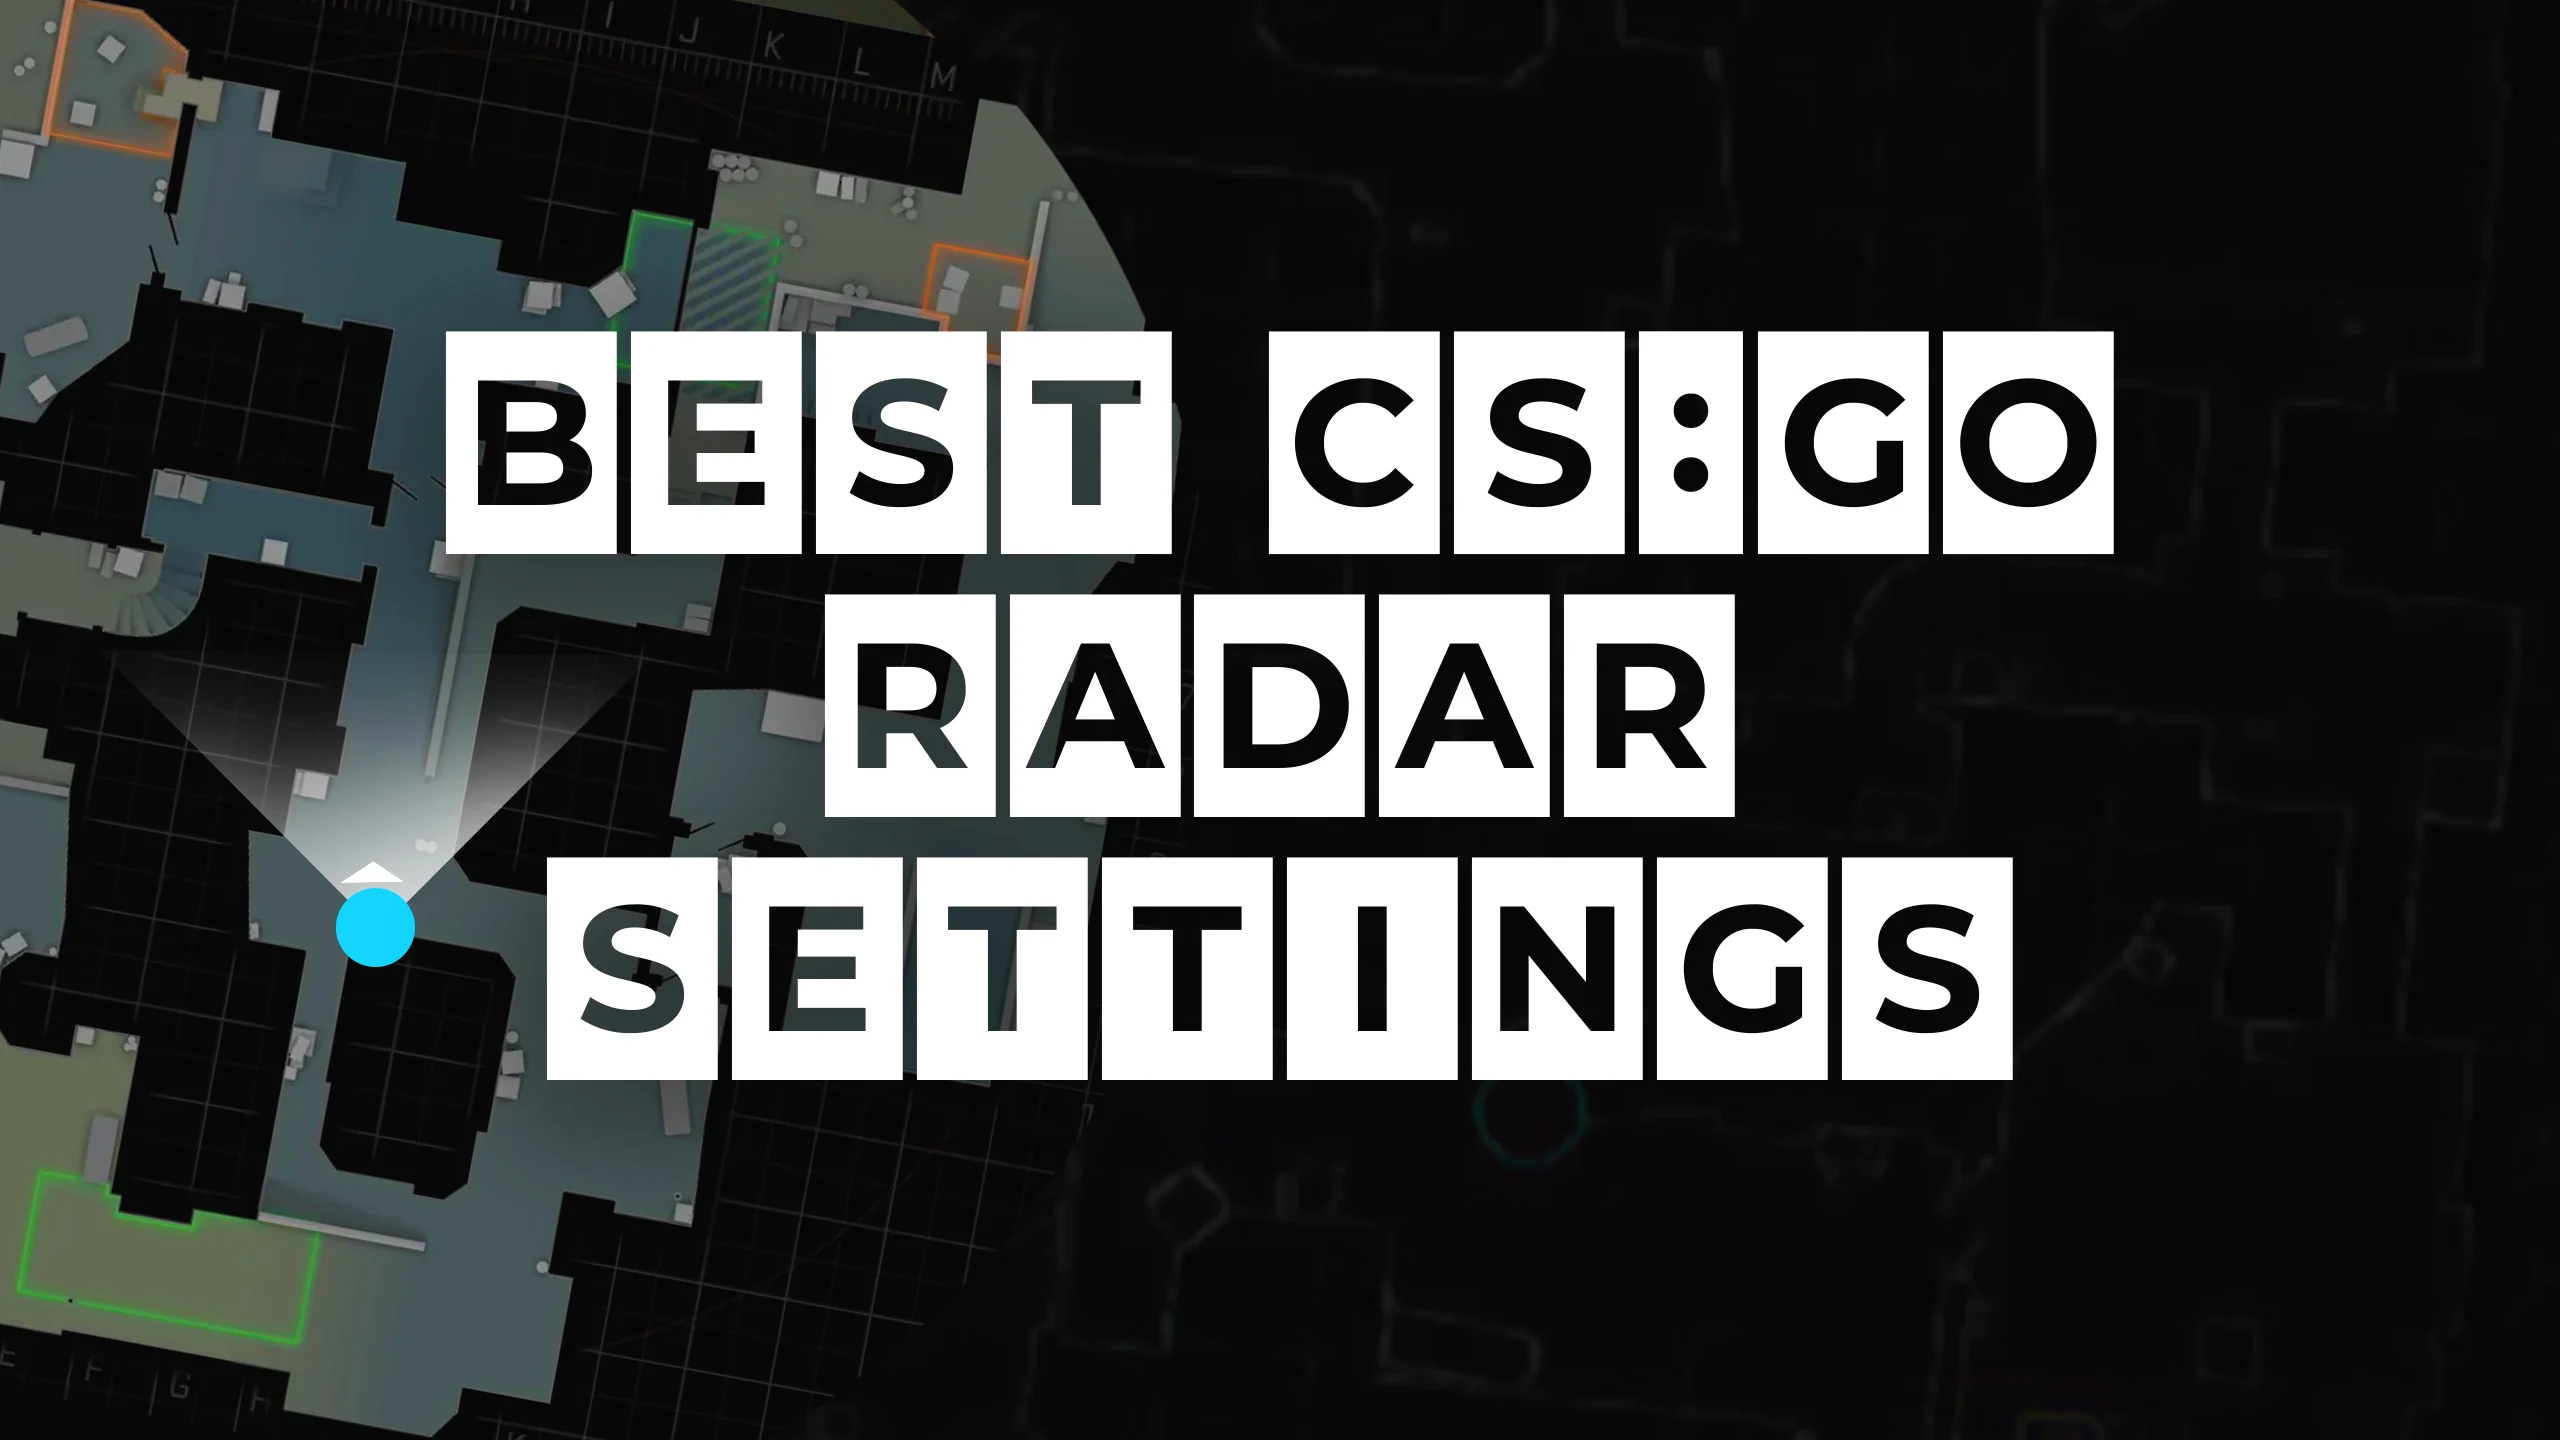 Best CS:GO Radar Settings